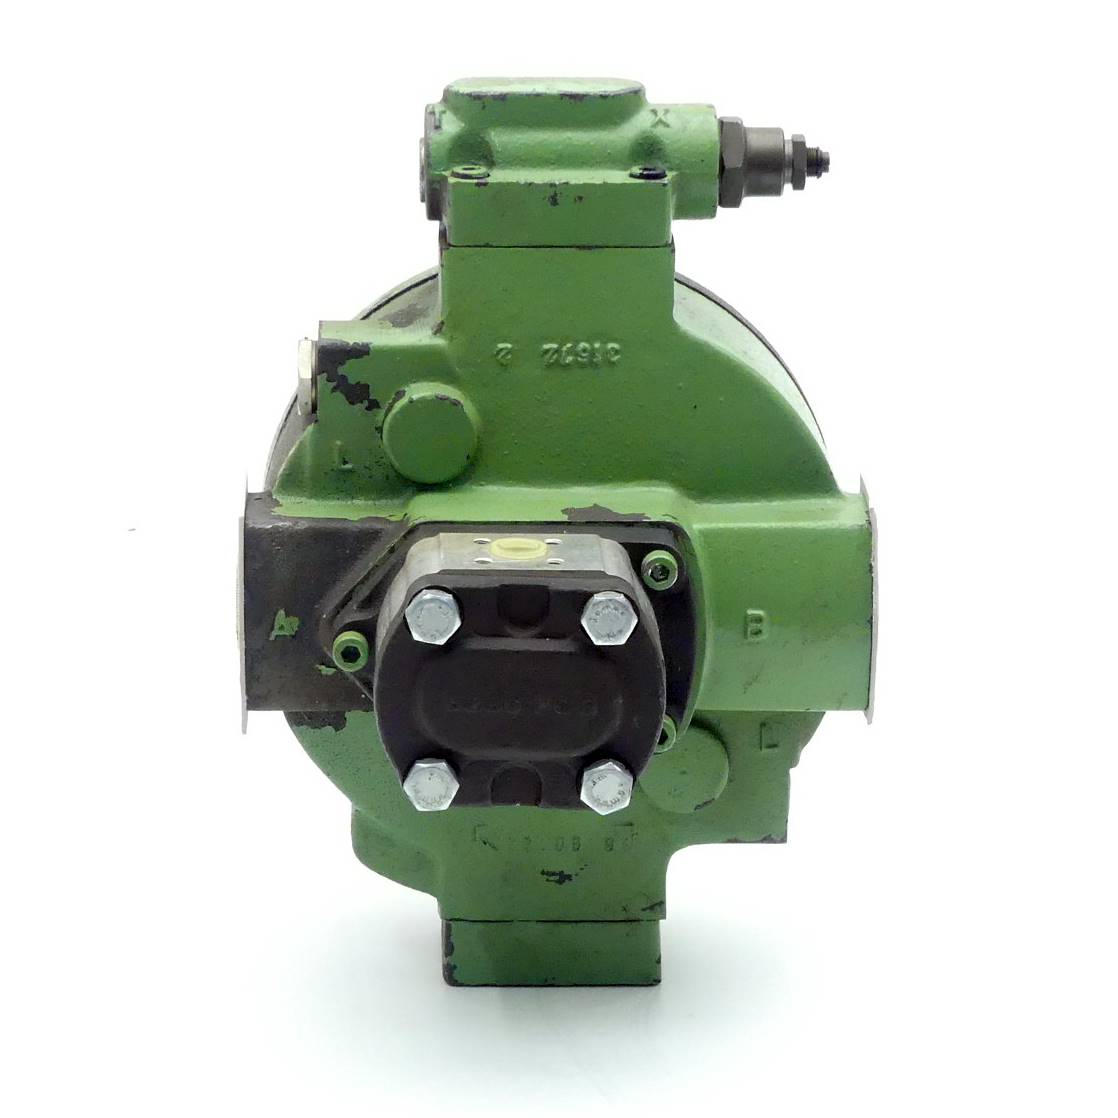 HYDRAULIC PUMP RADIAL piston pump Bosch 0514 503 001 Arburg hydraulic unit  £1,240.17 - PicClick UK